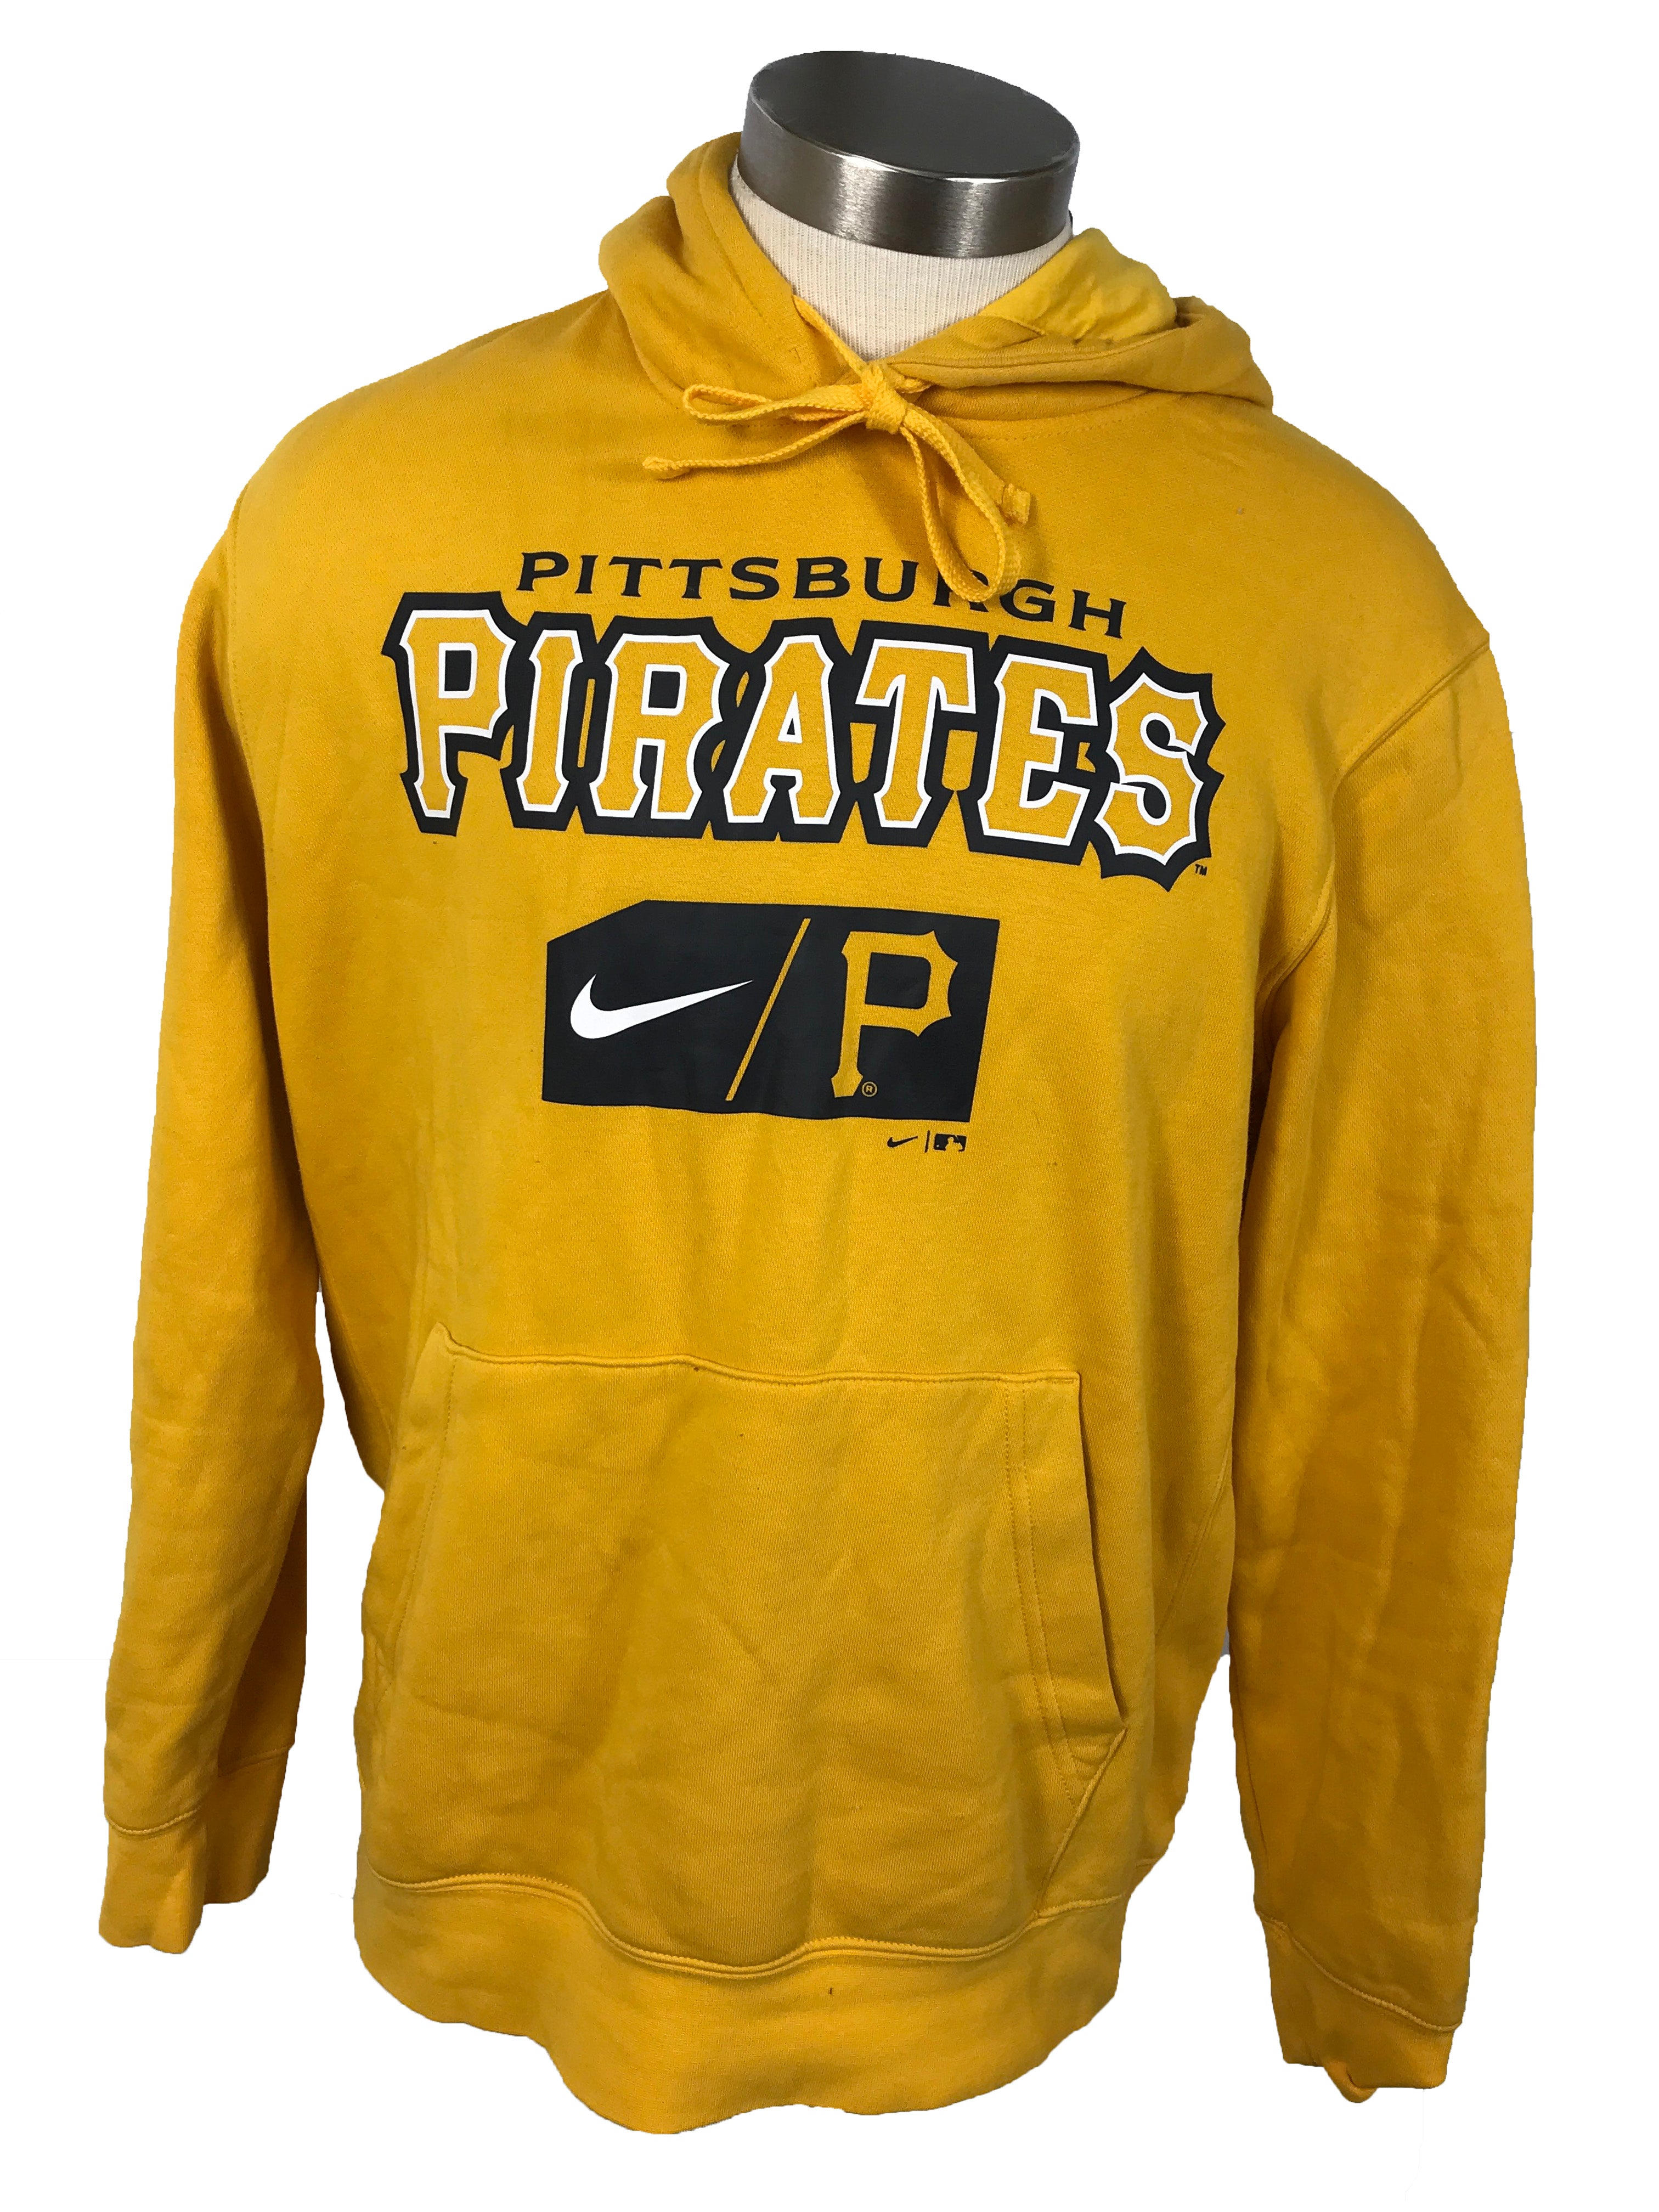 Pittsburgh pirates long sleeve men's shirt new by new era 2XL